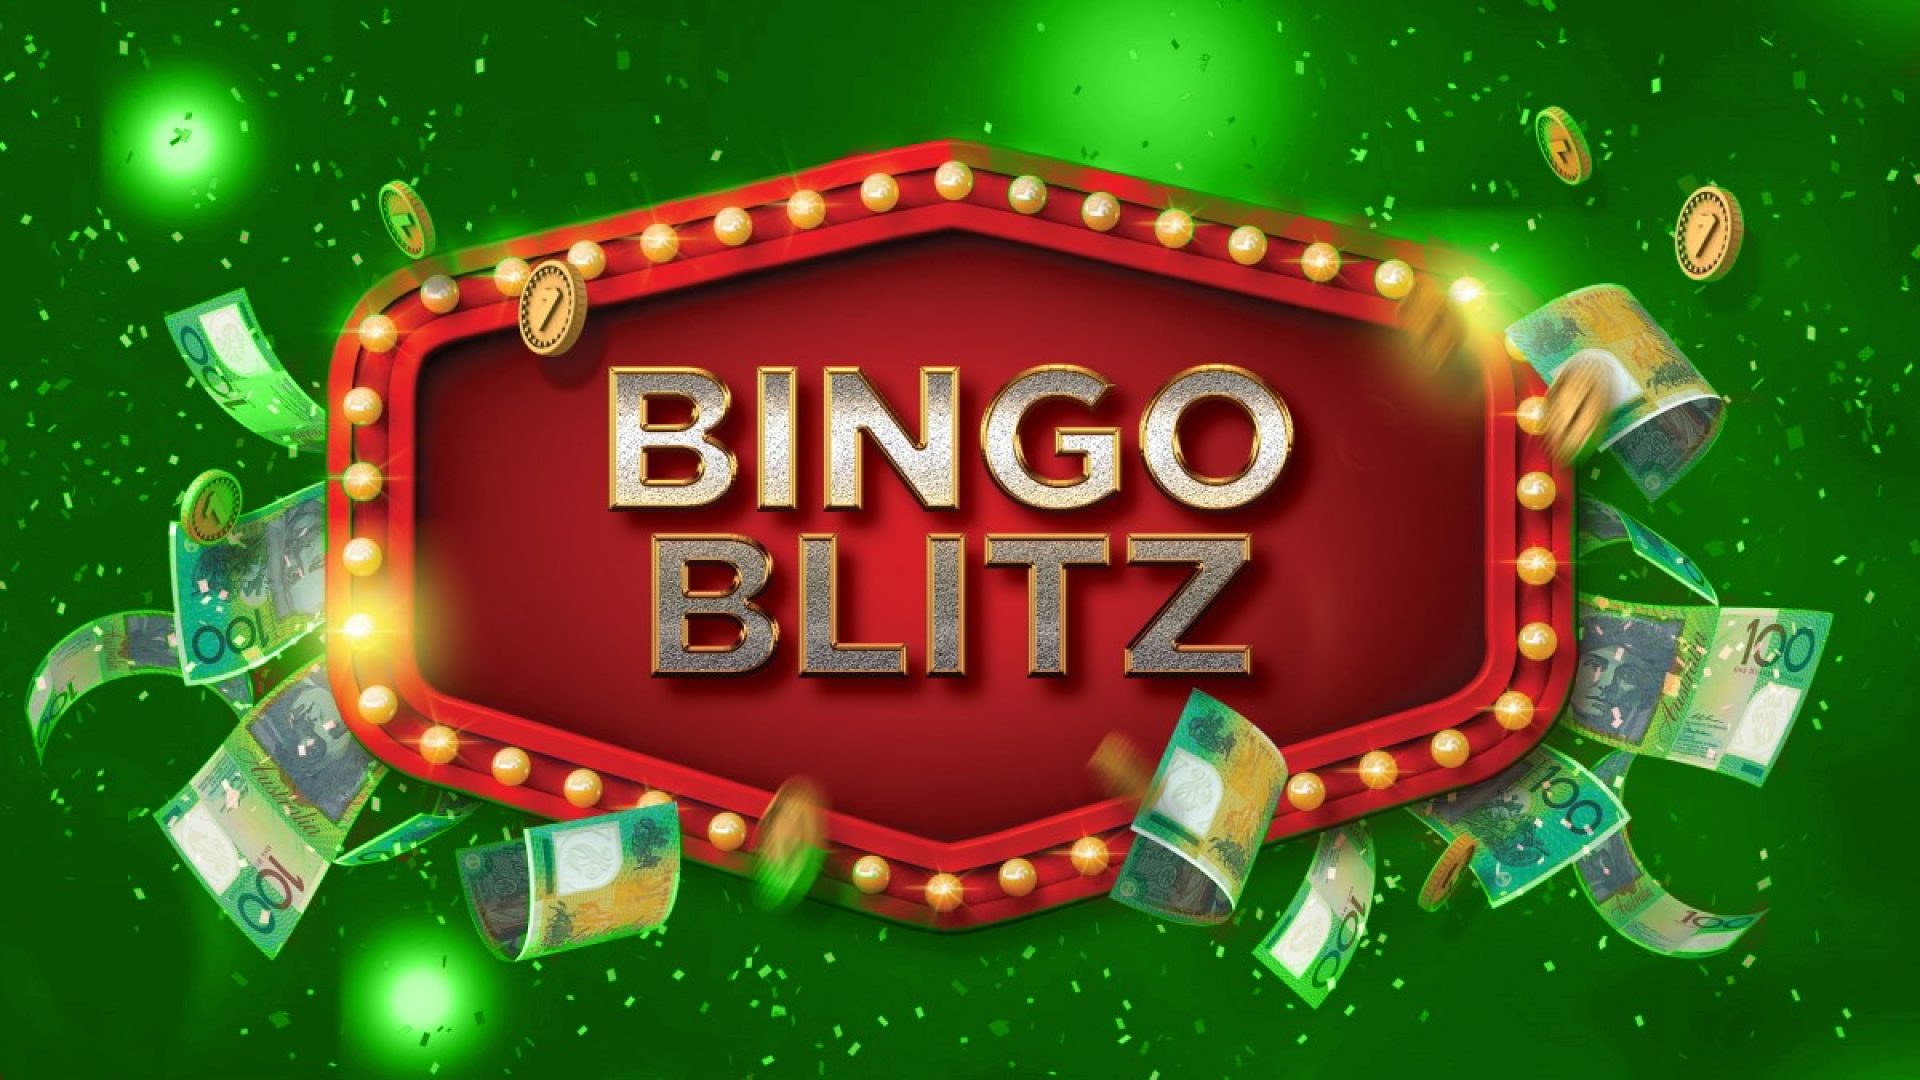 bingo blitz commercial cast